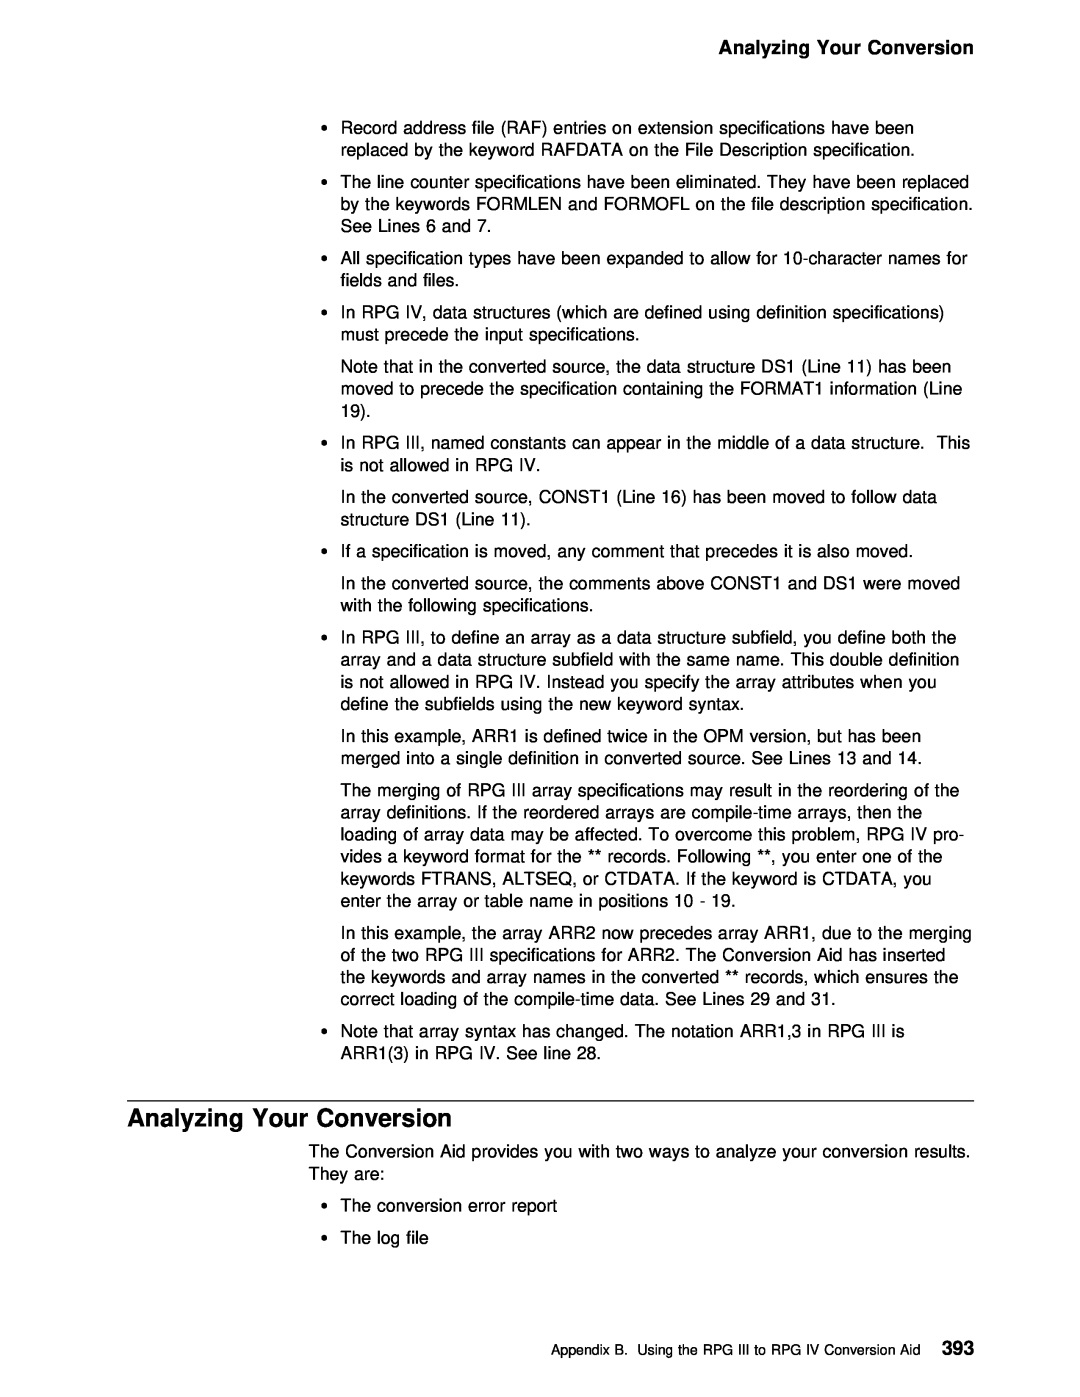 IBM AS/400 manual Analyzing Your Conversion 